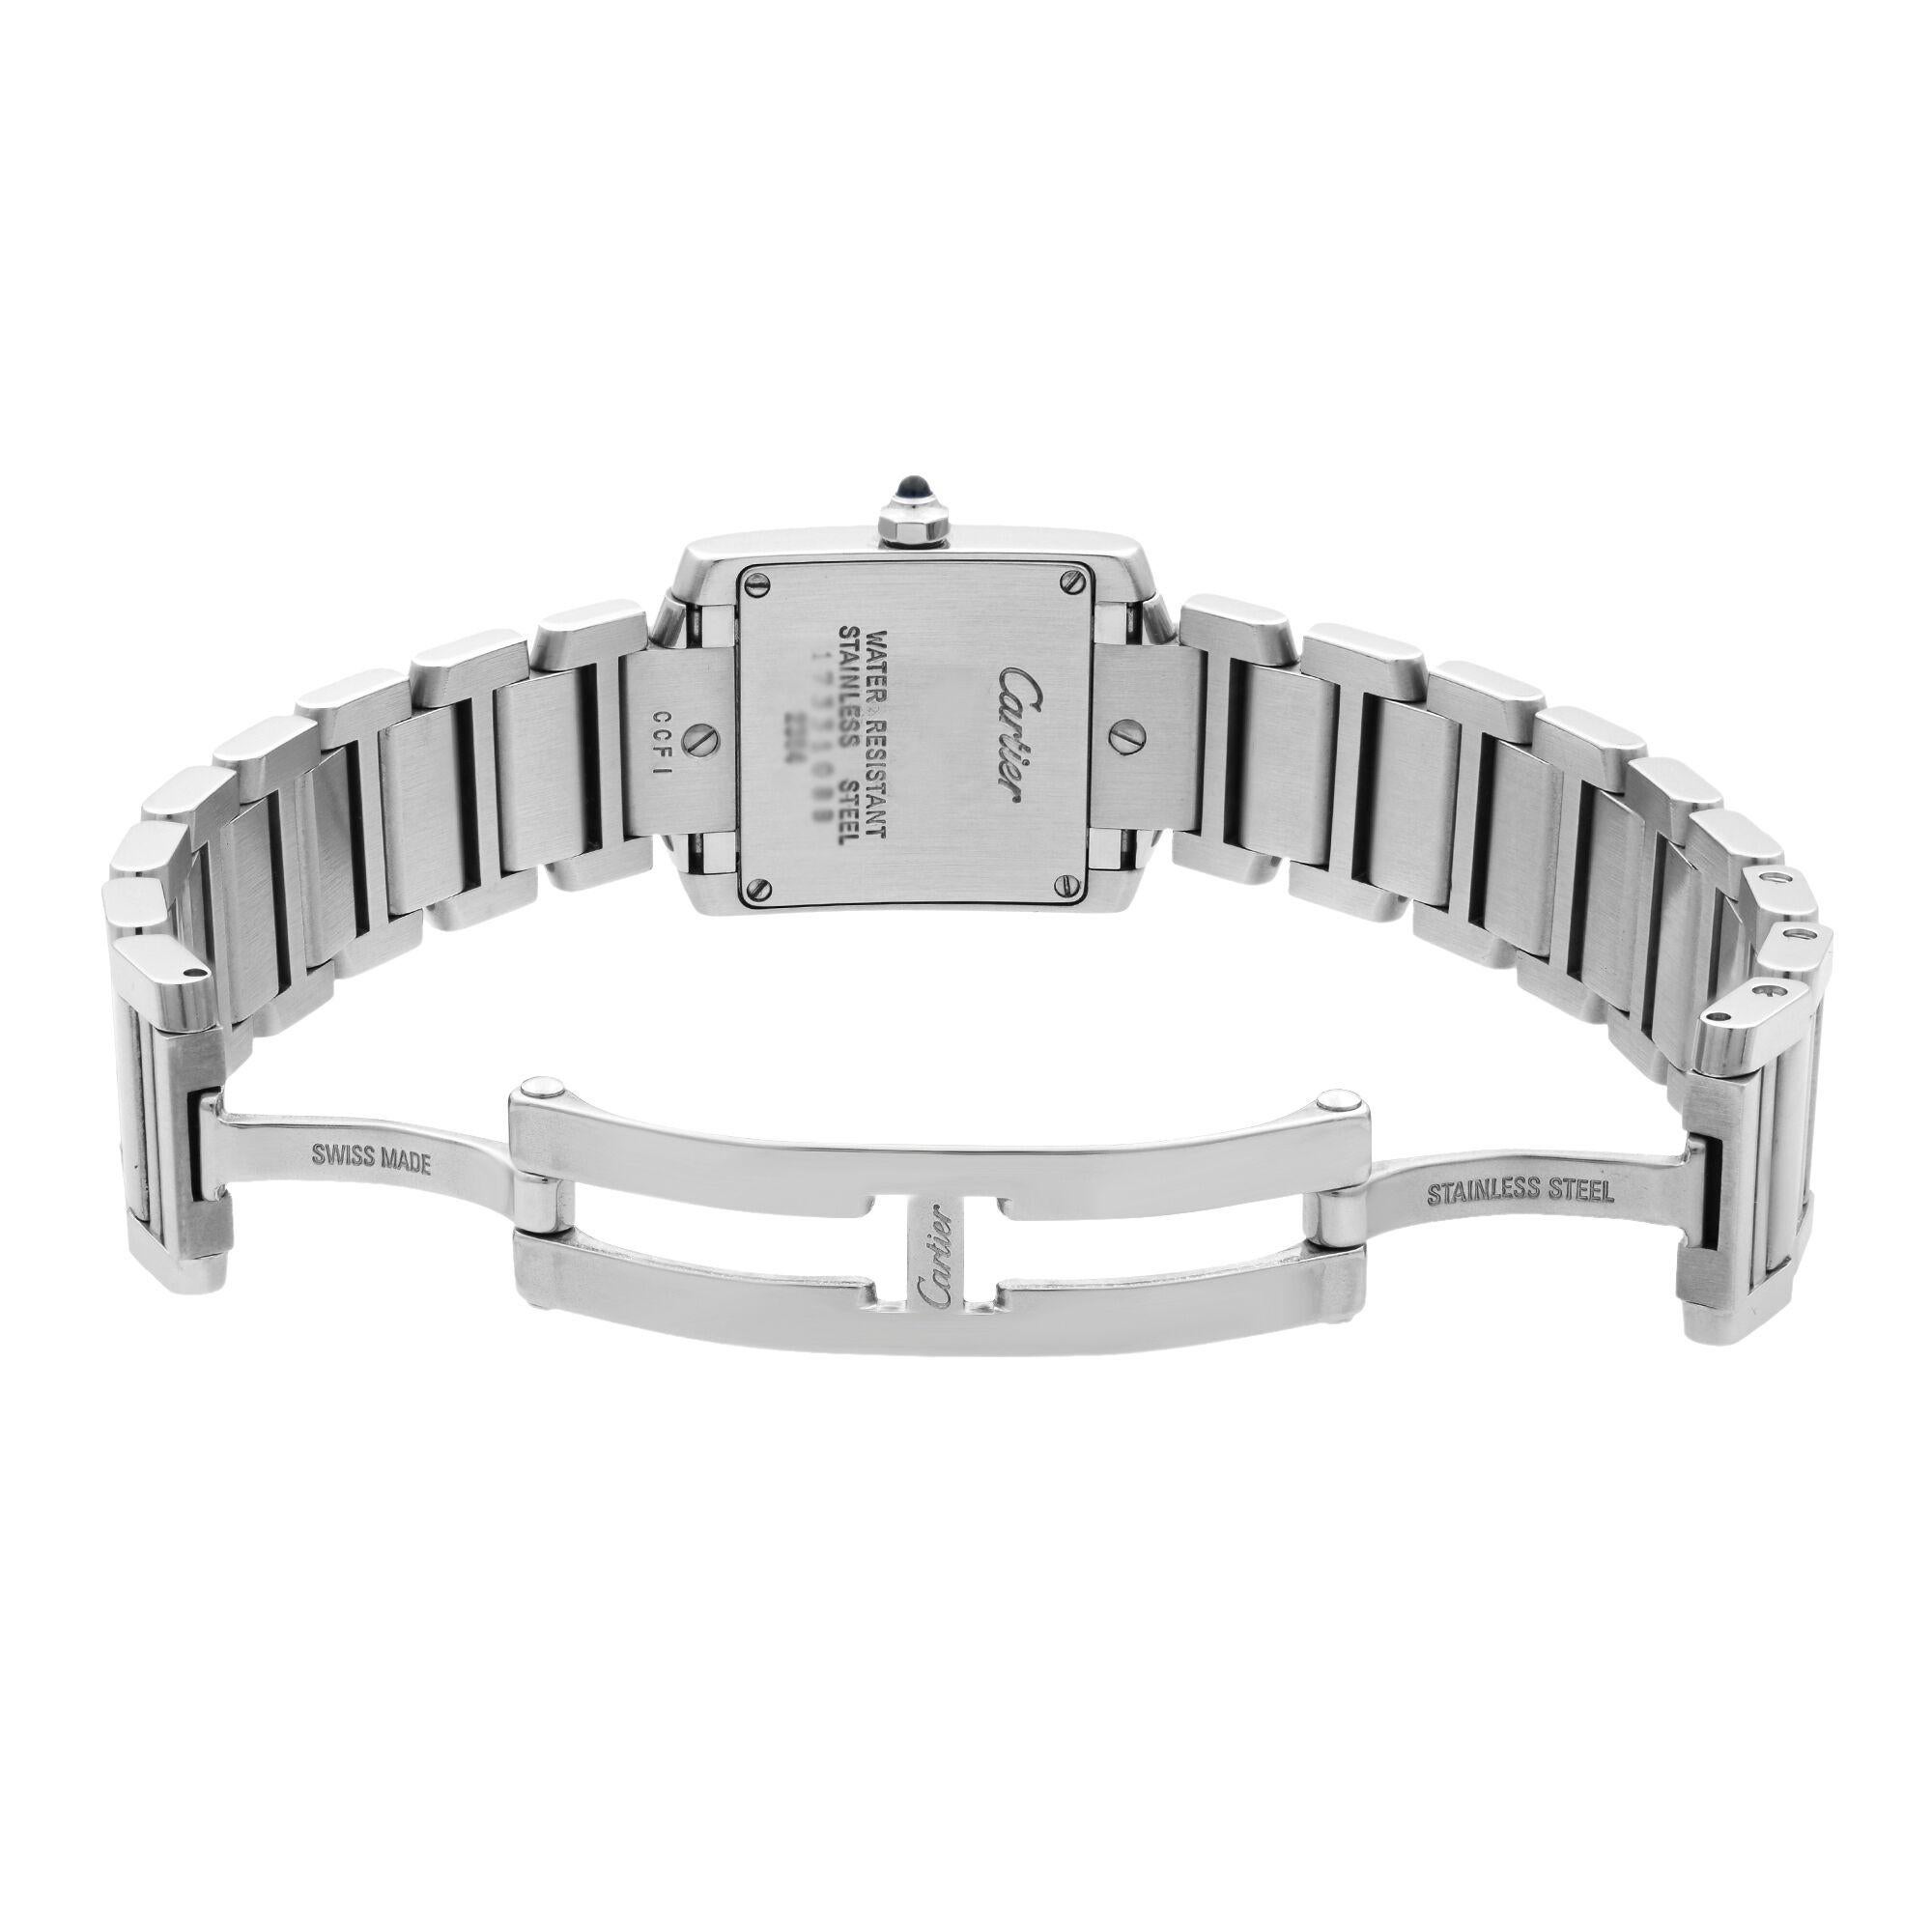 Cartier Tank Francaise Small Steel White Dial Quartz Women's Watch W51008Q3 3